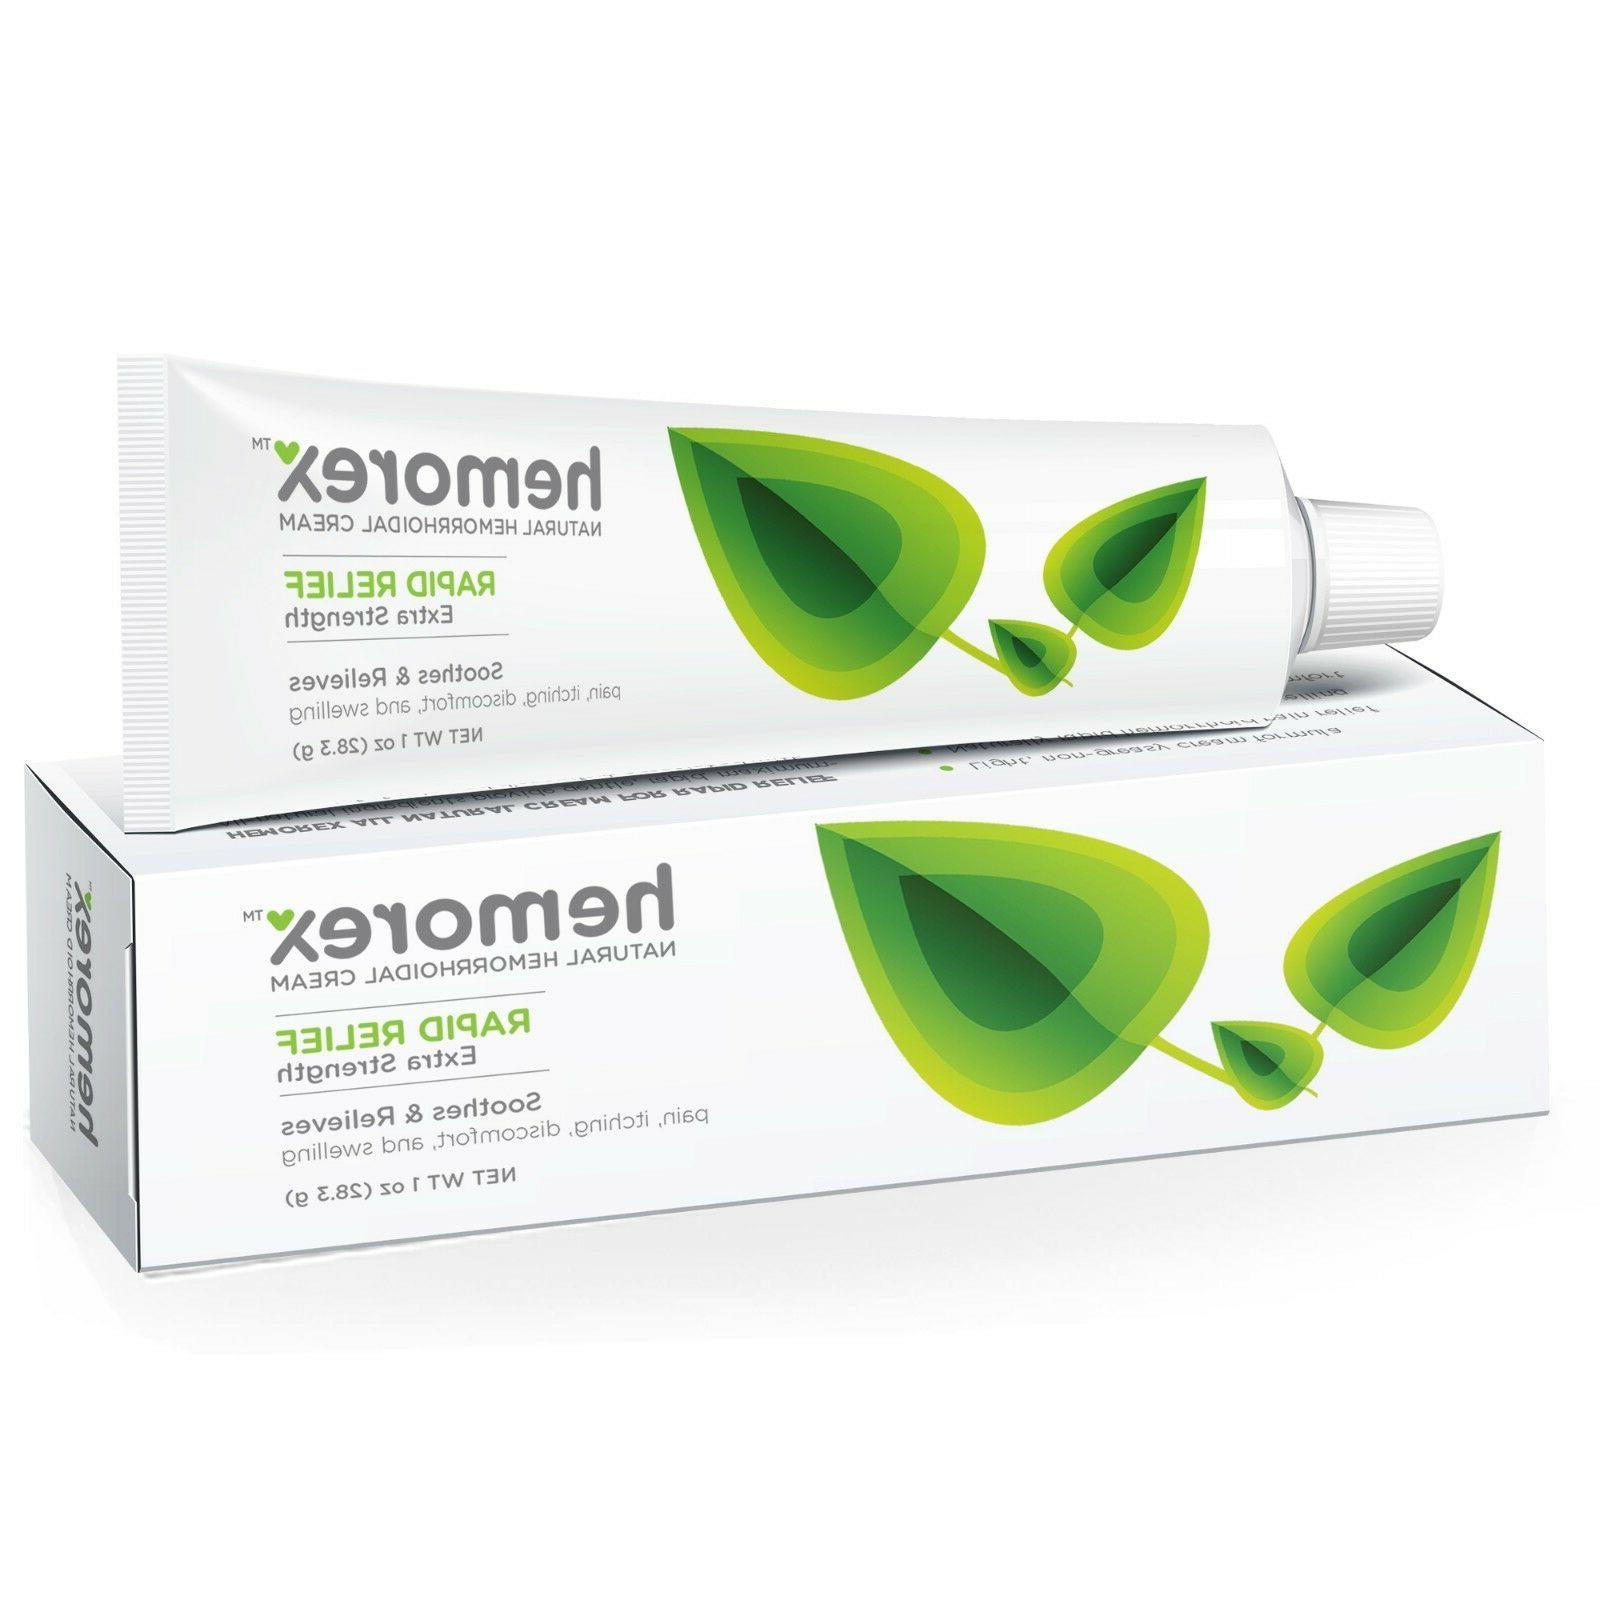 Hemorex Hemorrhoid Fast Relief Cream, Natural Healing Formul